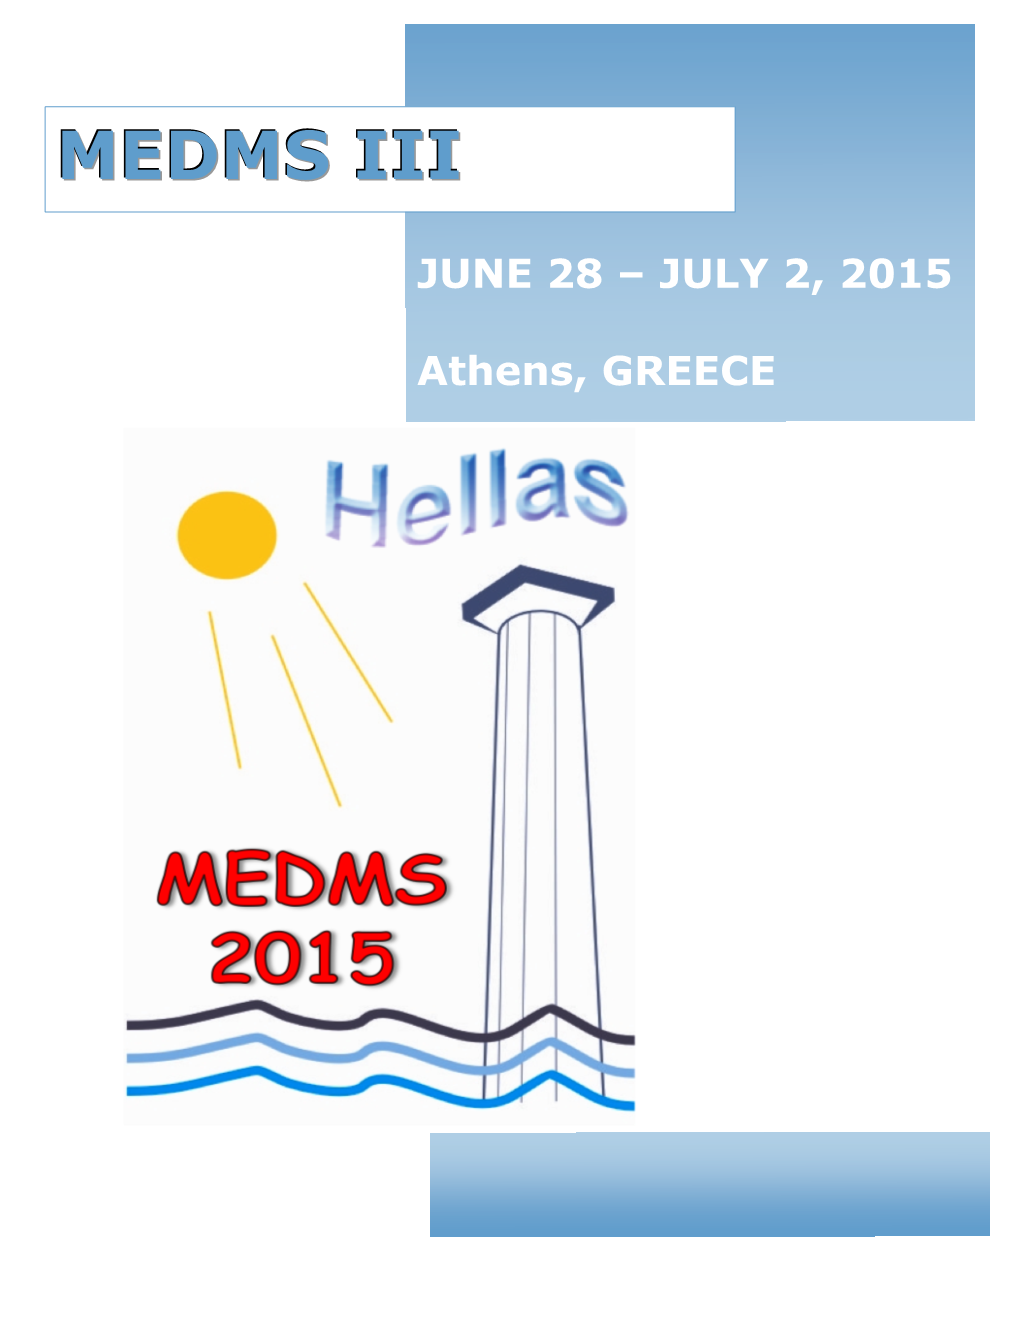 Medms Iii Athens, Greece; June 28-July 2, 2015